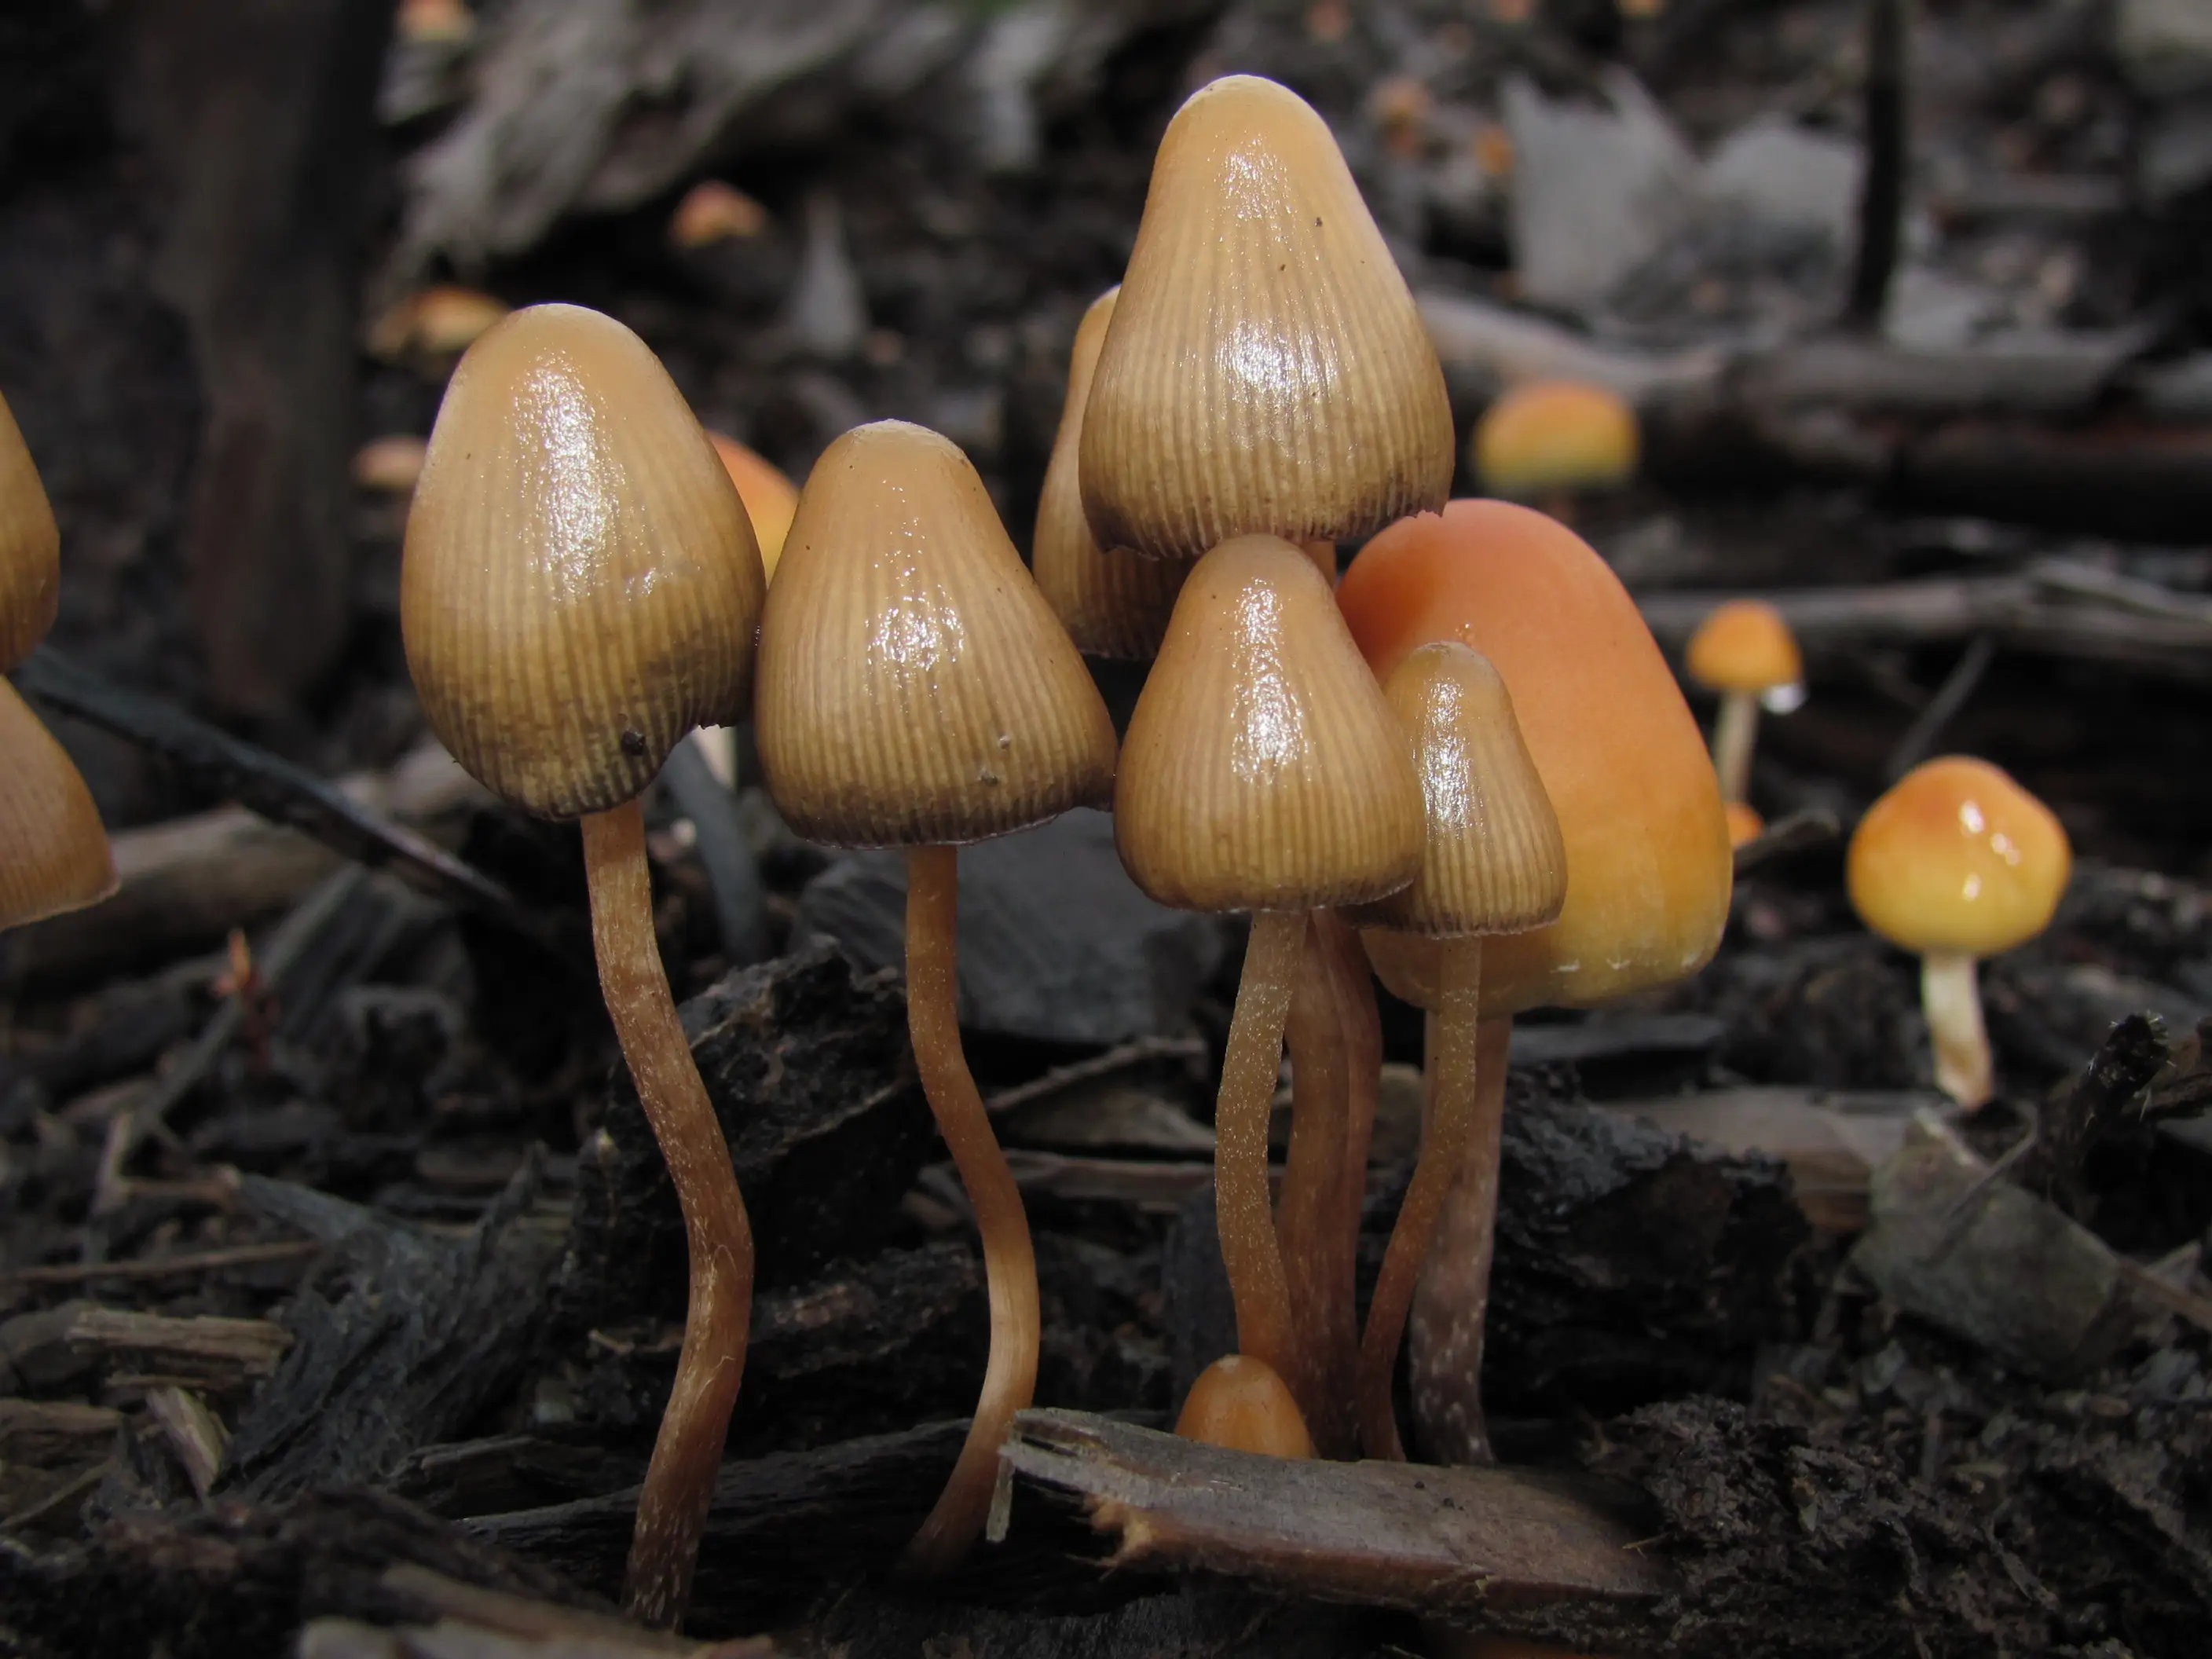 Psilocybn mushrooms